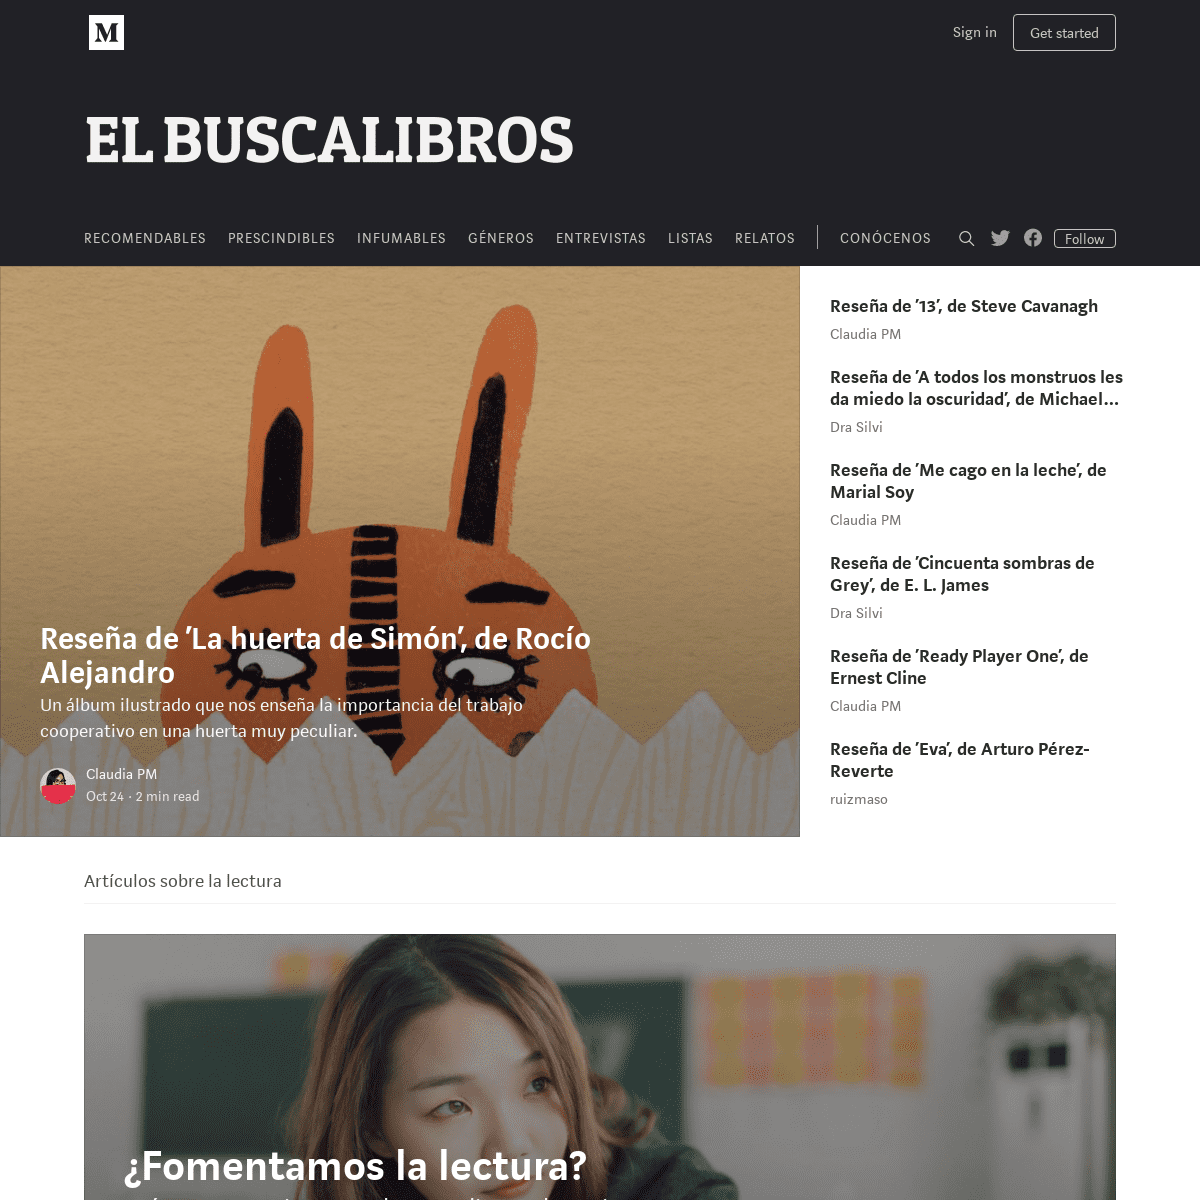 A complete backup of elbuscalibros.com